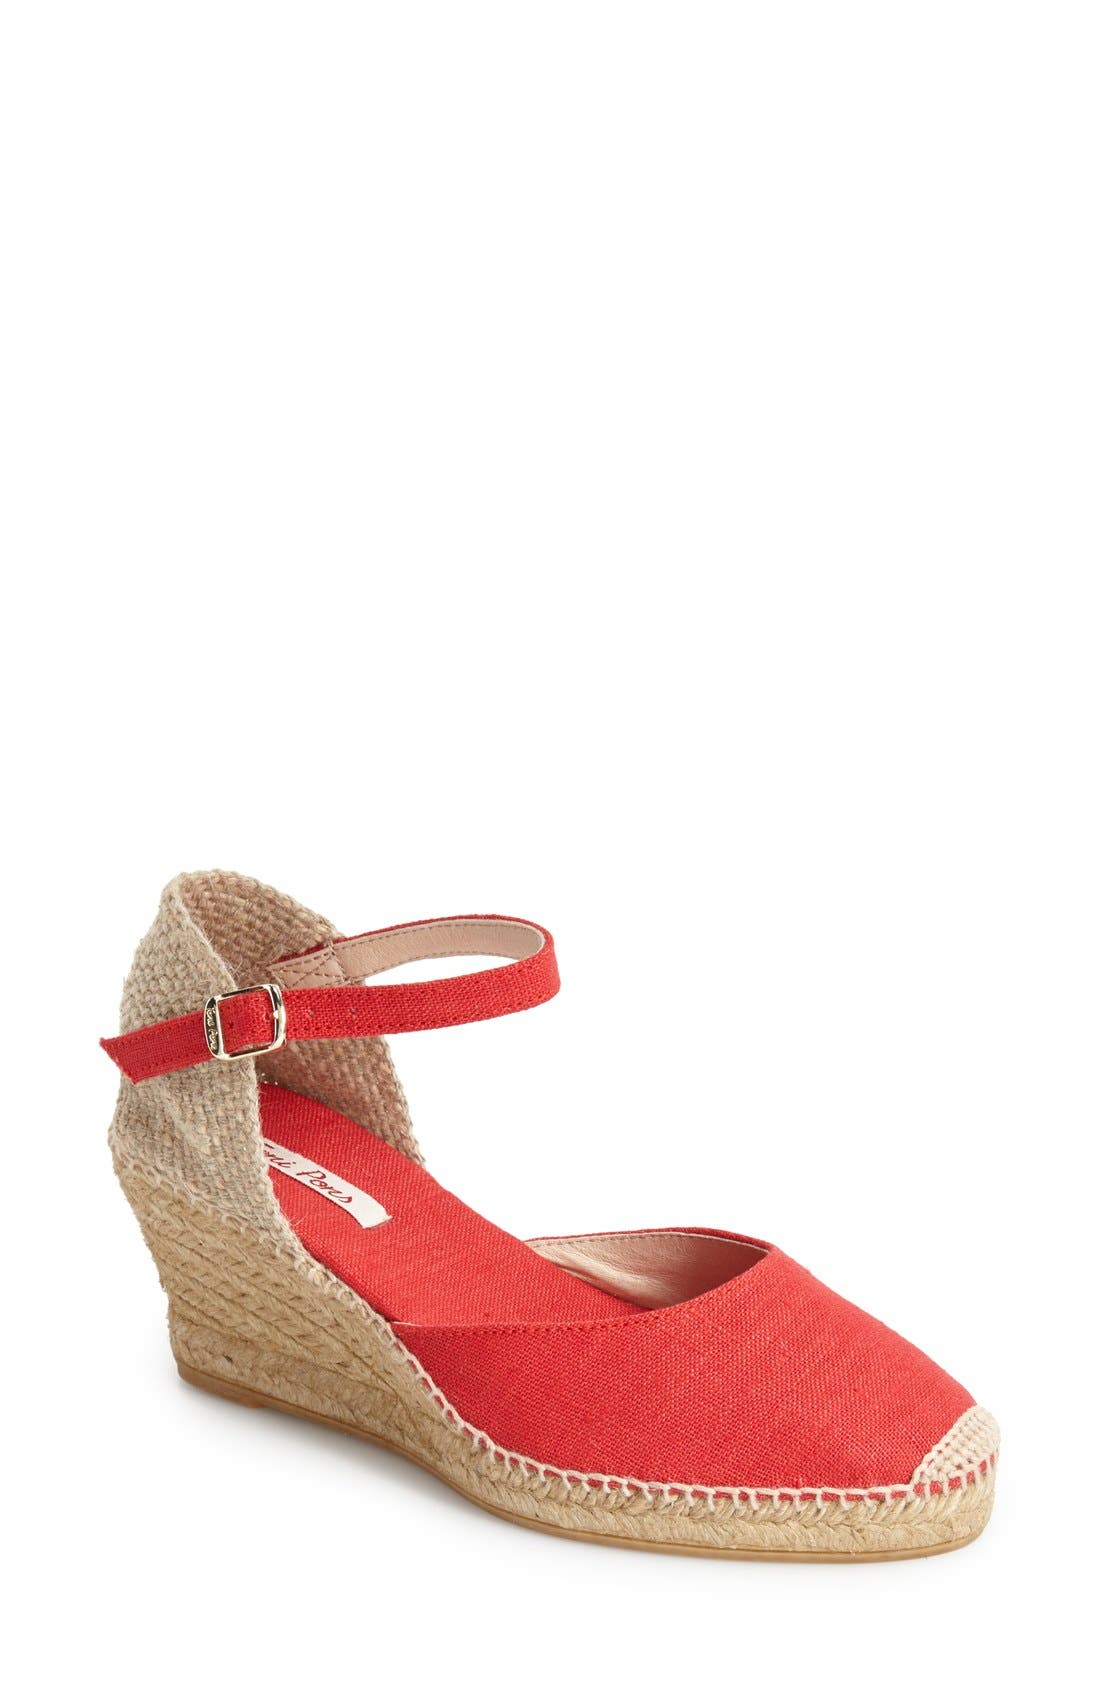 Caldes Linen Wedge Sandal in Red at Nordstrom Nordstrom Women Shoes High Heels Wedges Wedge Sandals 